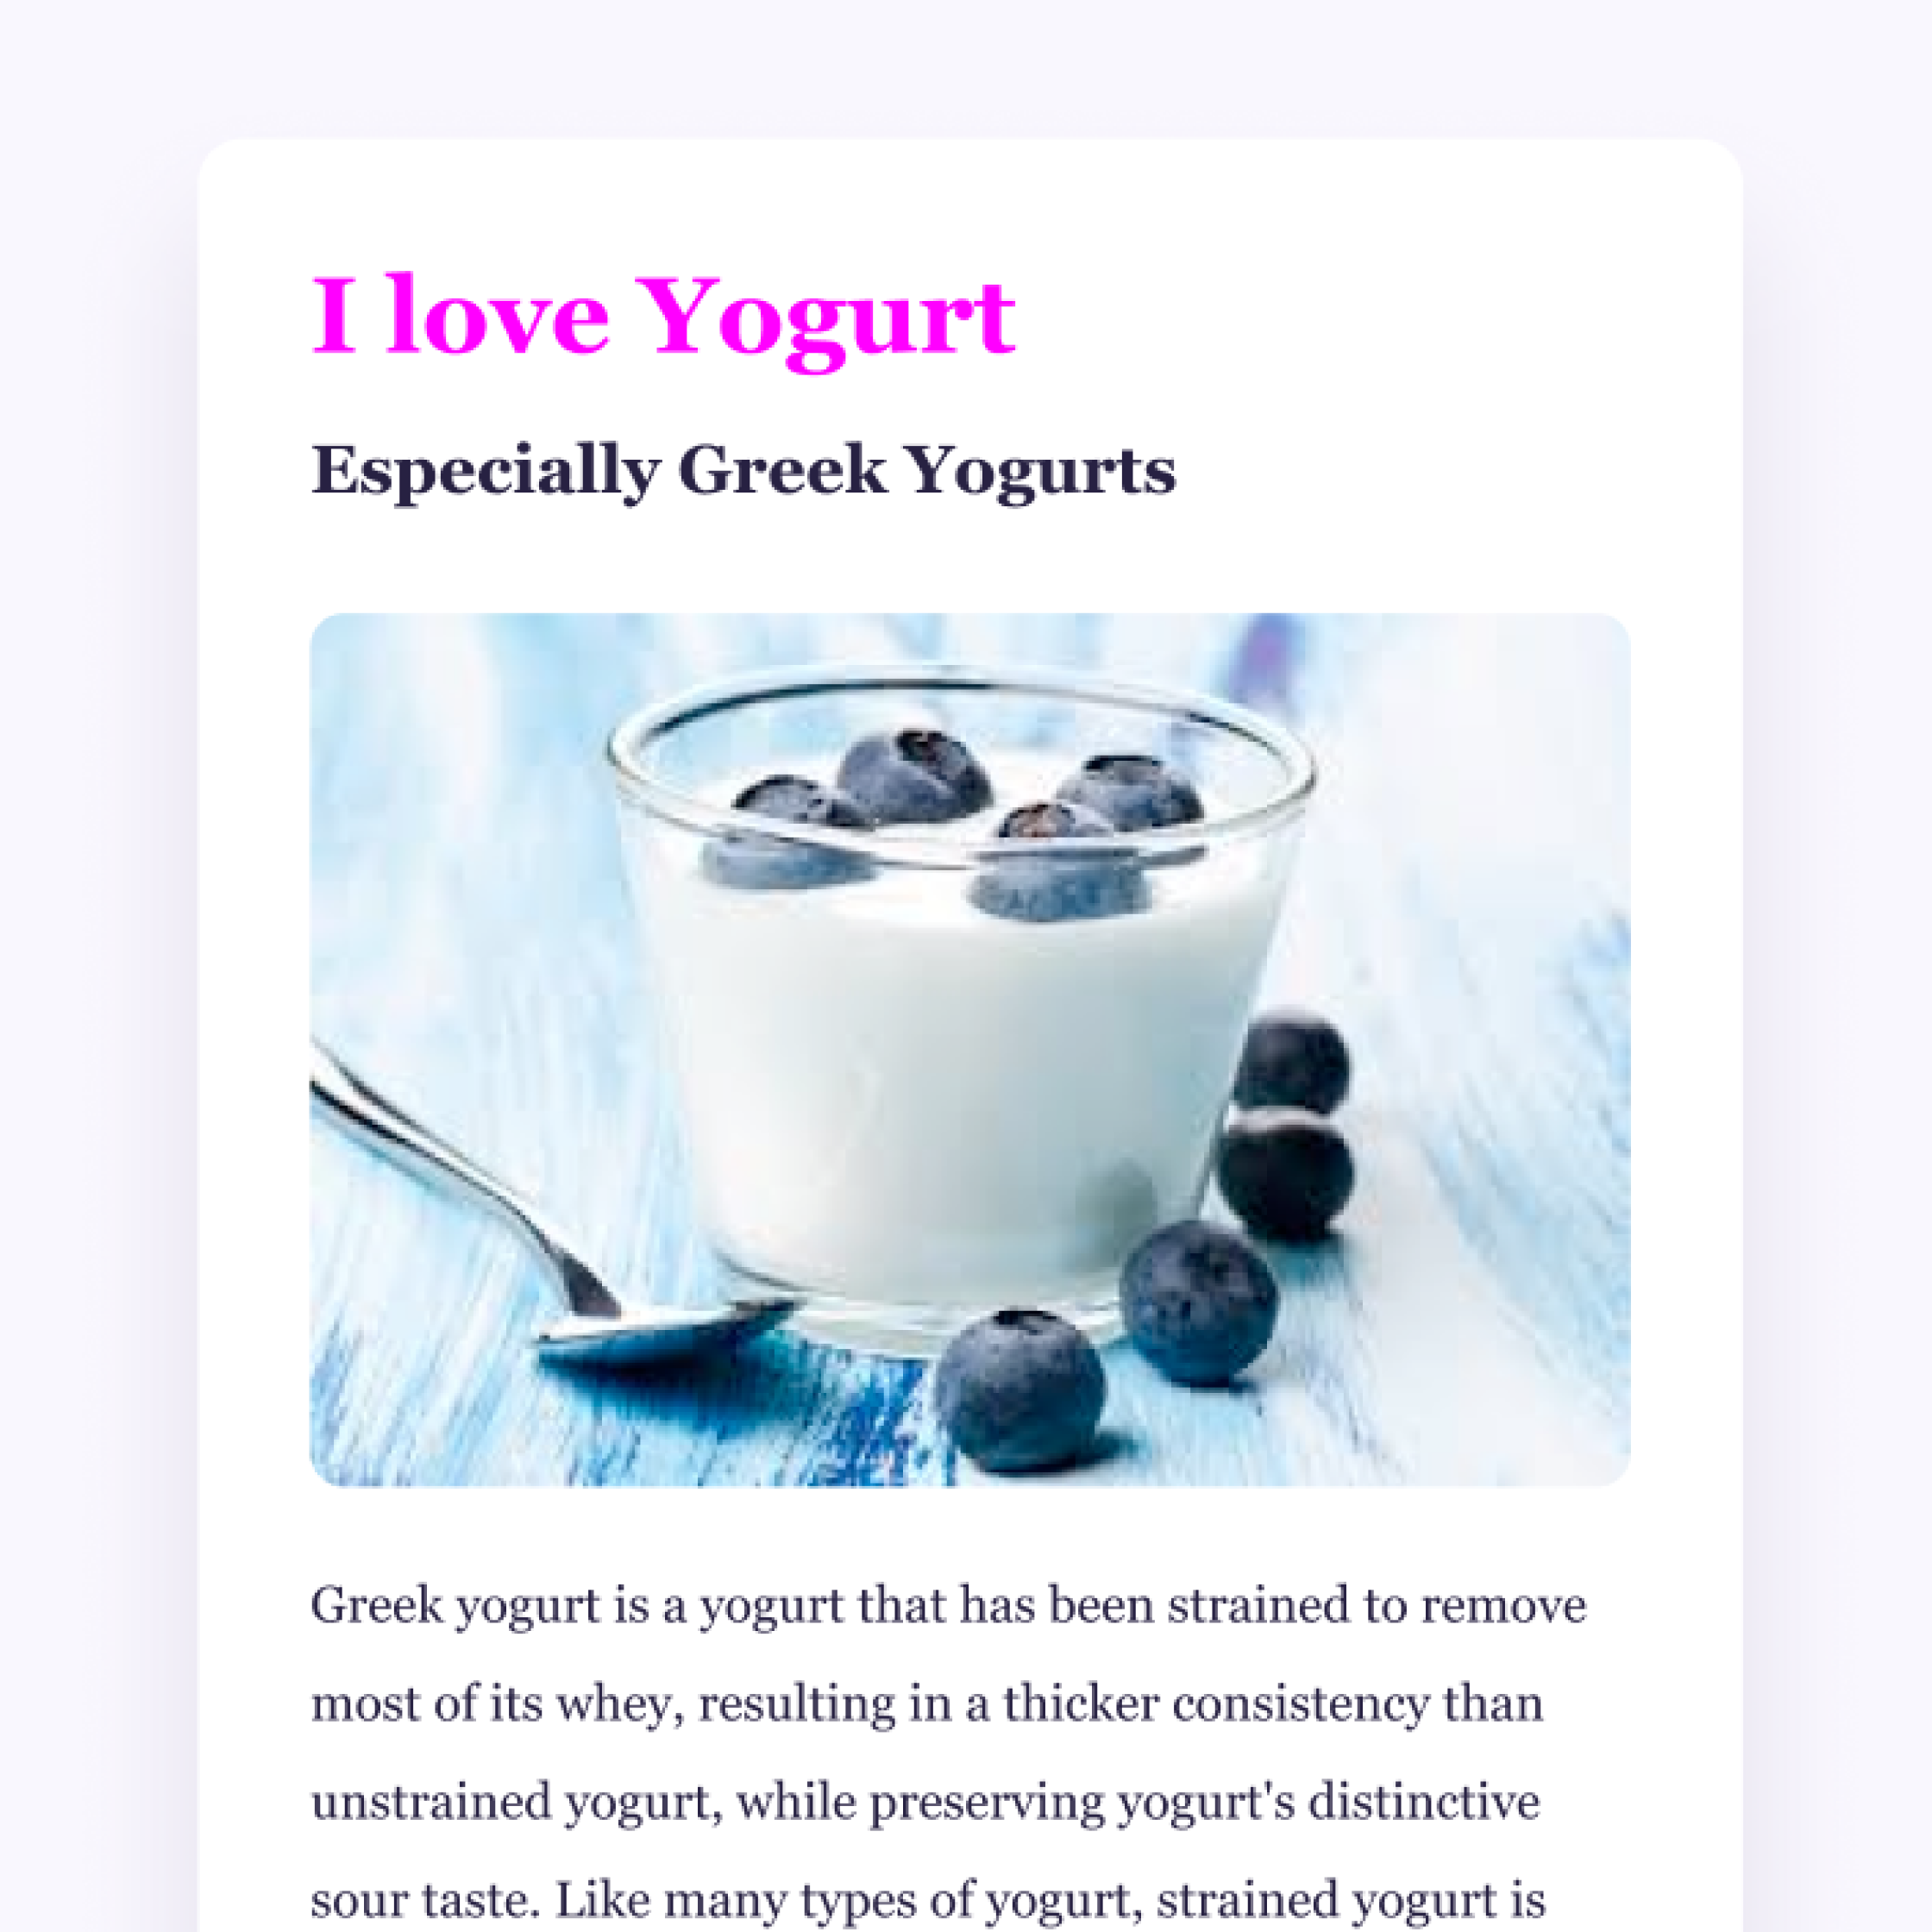 View Yogurt project